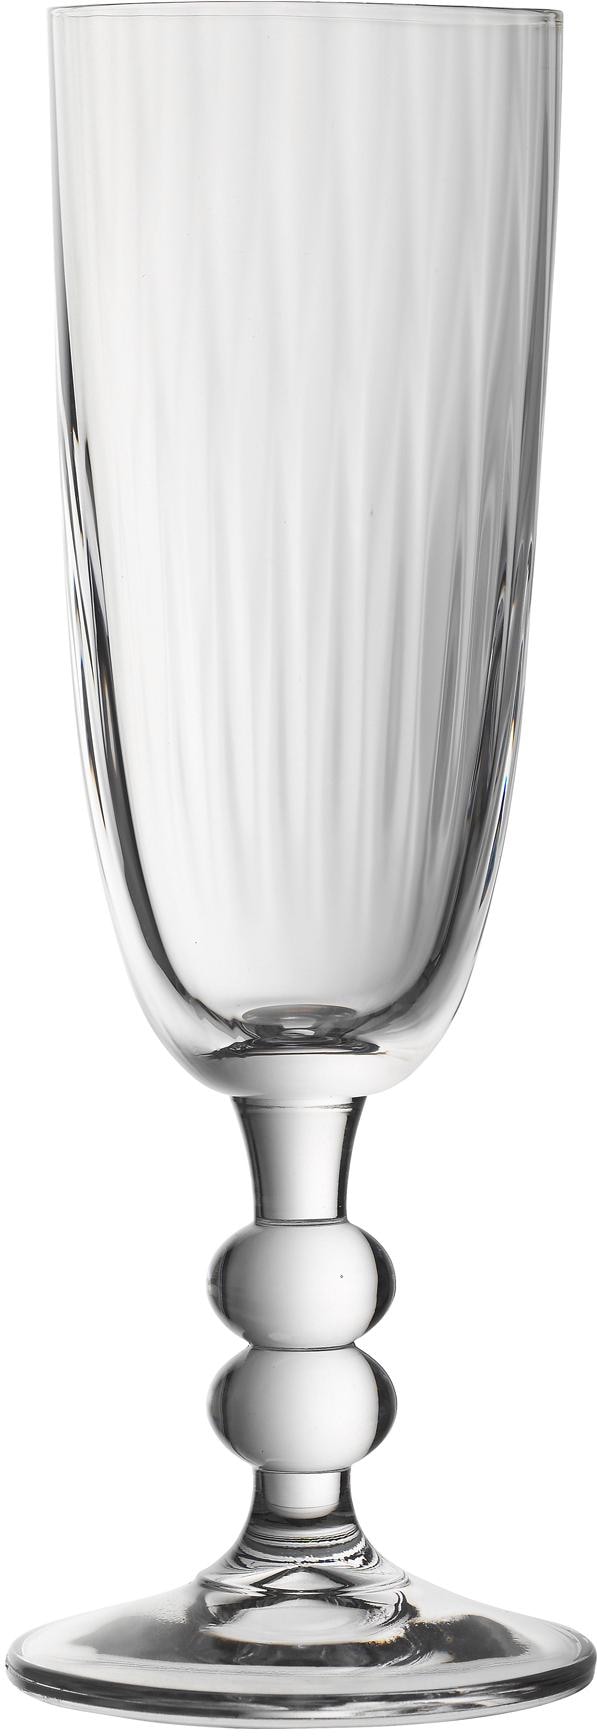 BOHEMIA SELECTION Gläser-Set New England, (Set, 6 tlg.), für Sekt, 180 ml, 6-teilig